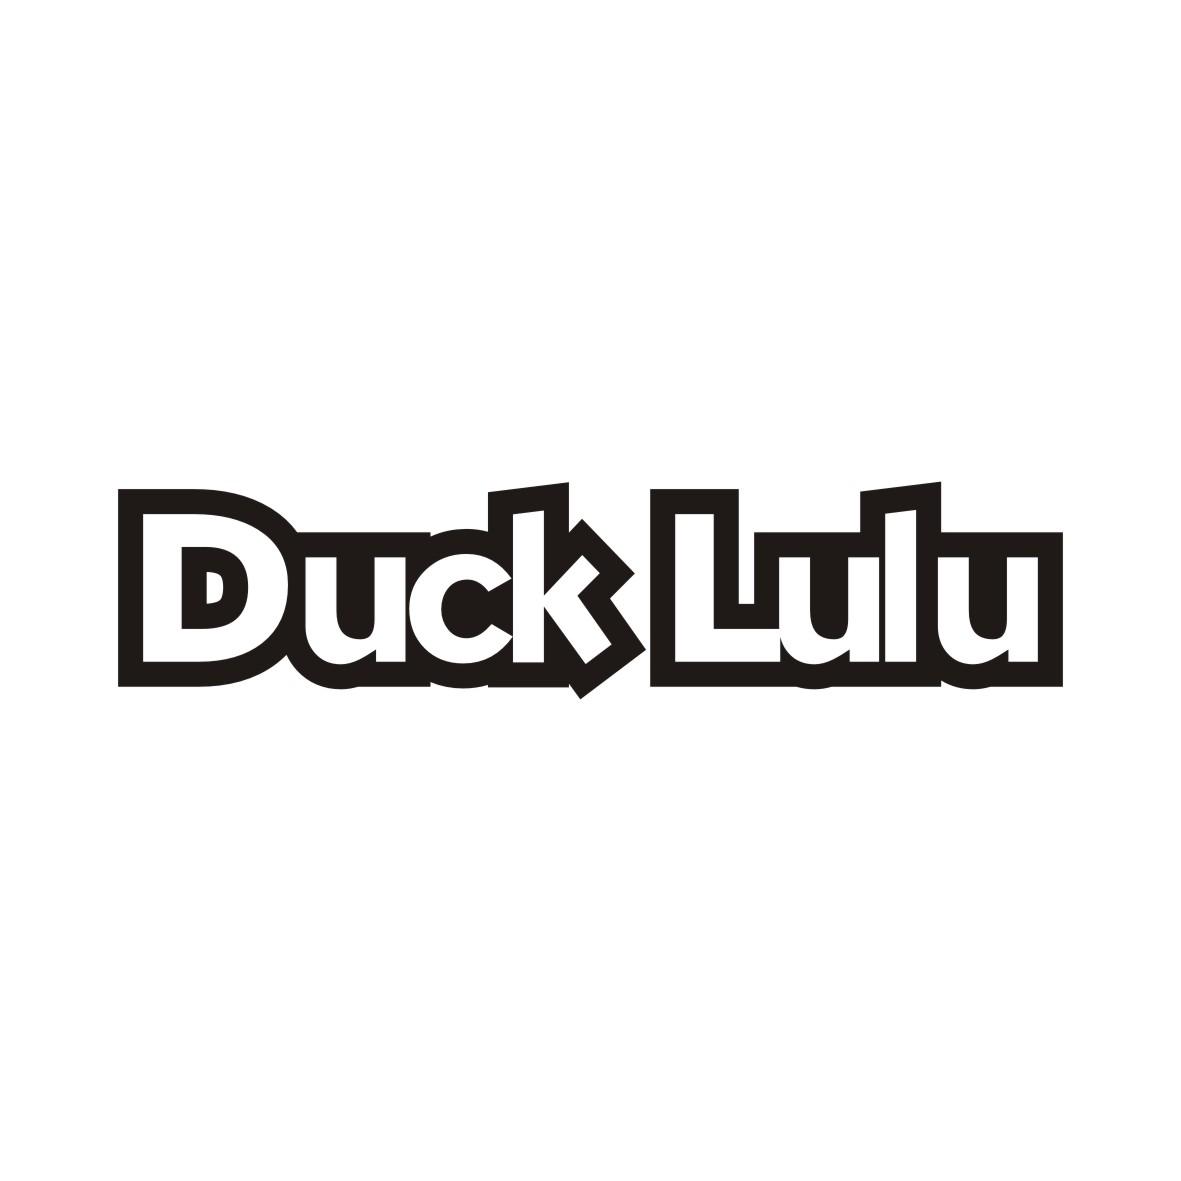 DUCK LULU商标转让